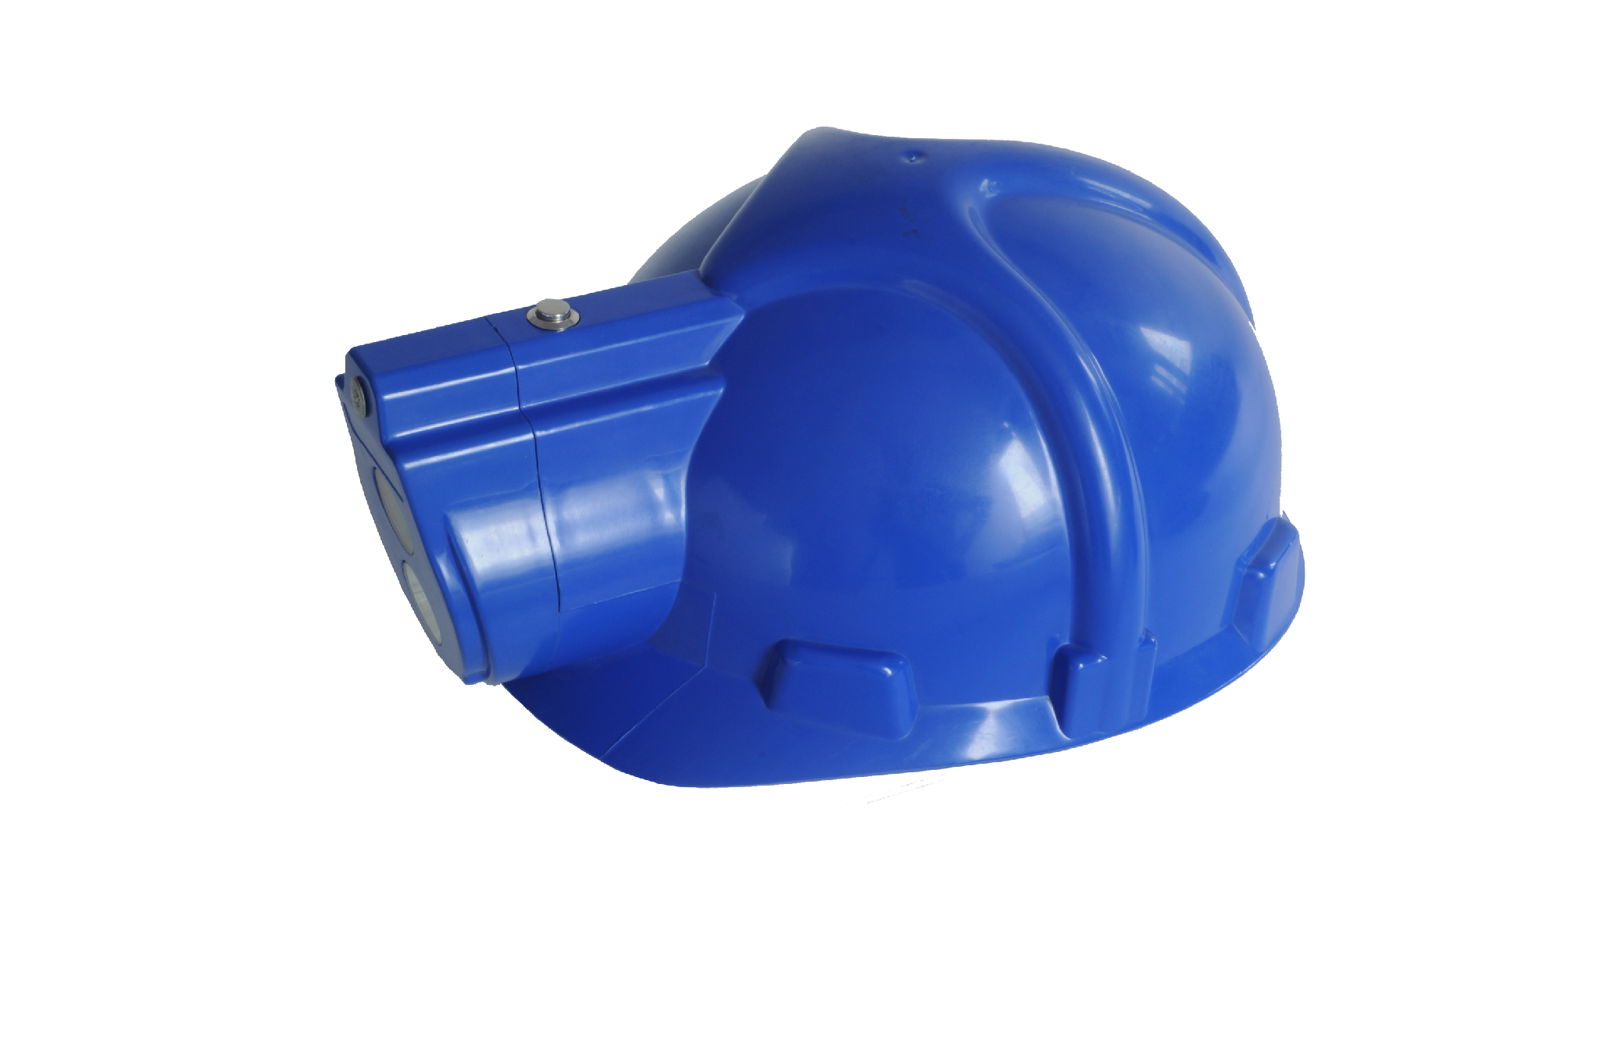 4G Intelligent Safety Monitoring Helmet,Construction Site Helmet